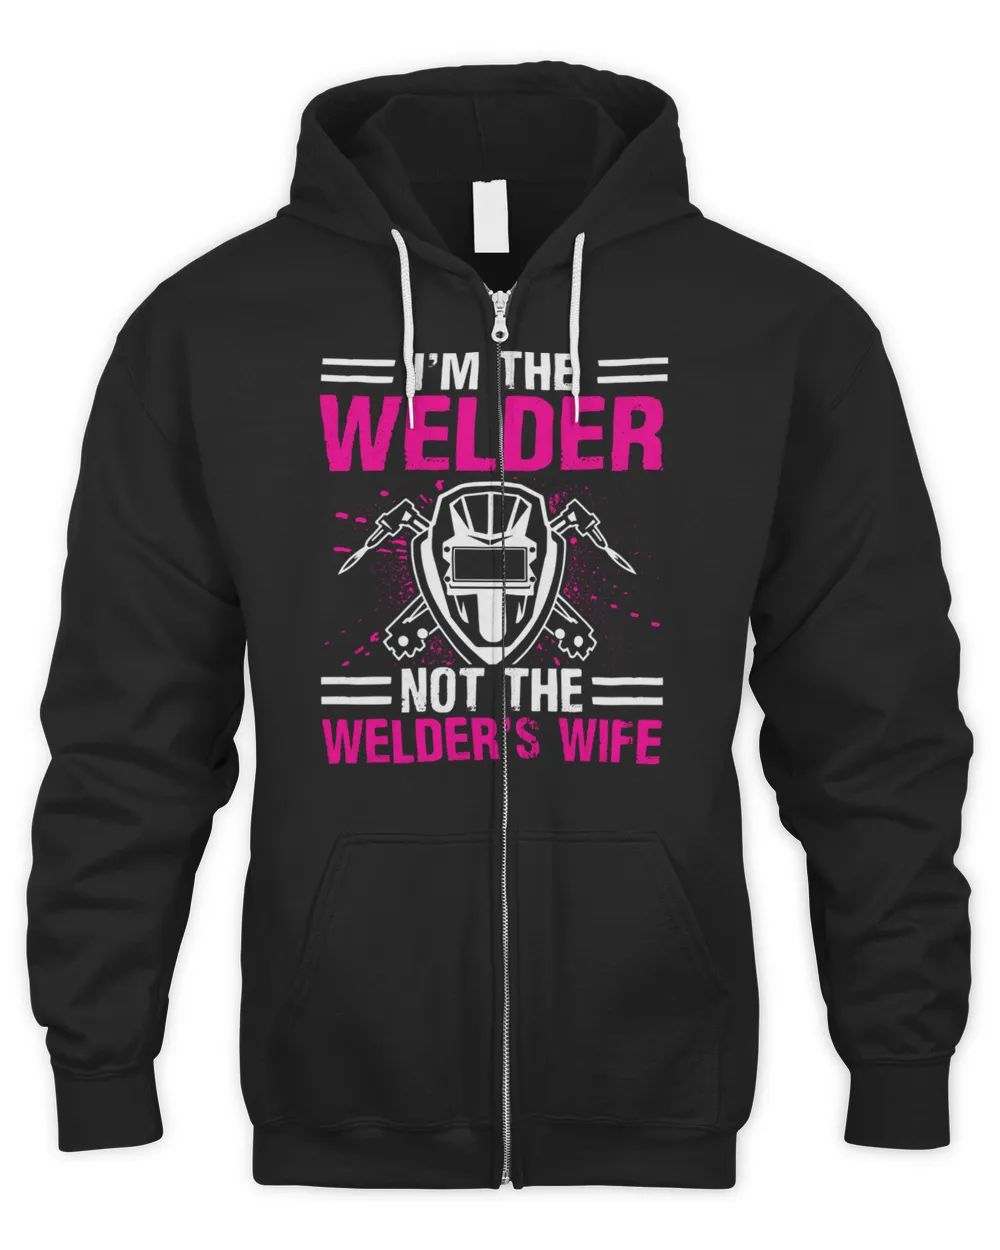 I'm The Welder Not The Welder's Wife, Female Welders T-Shirt